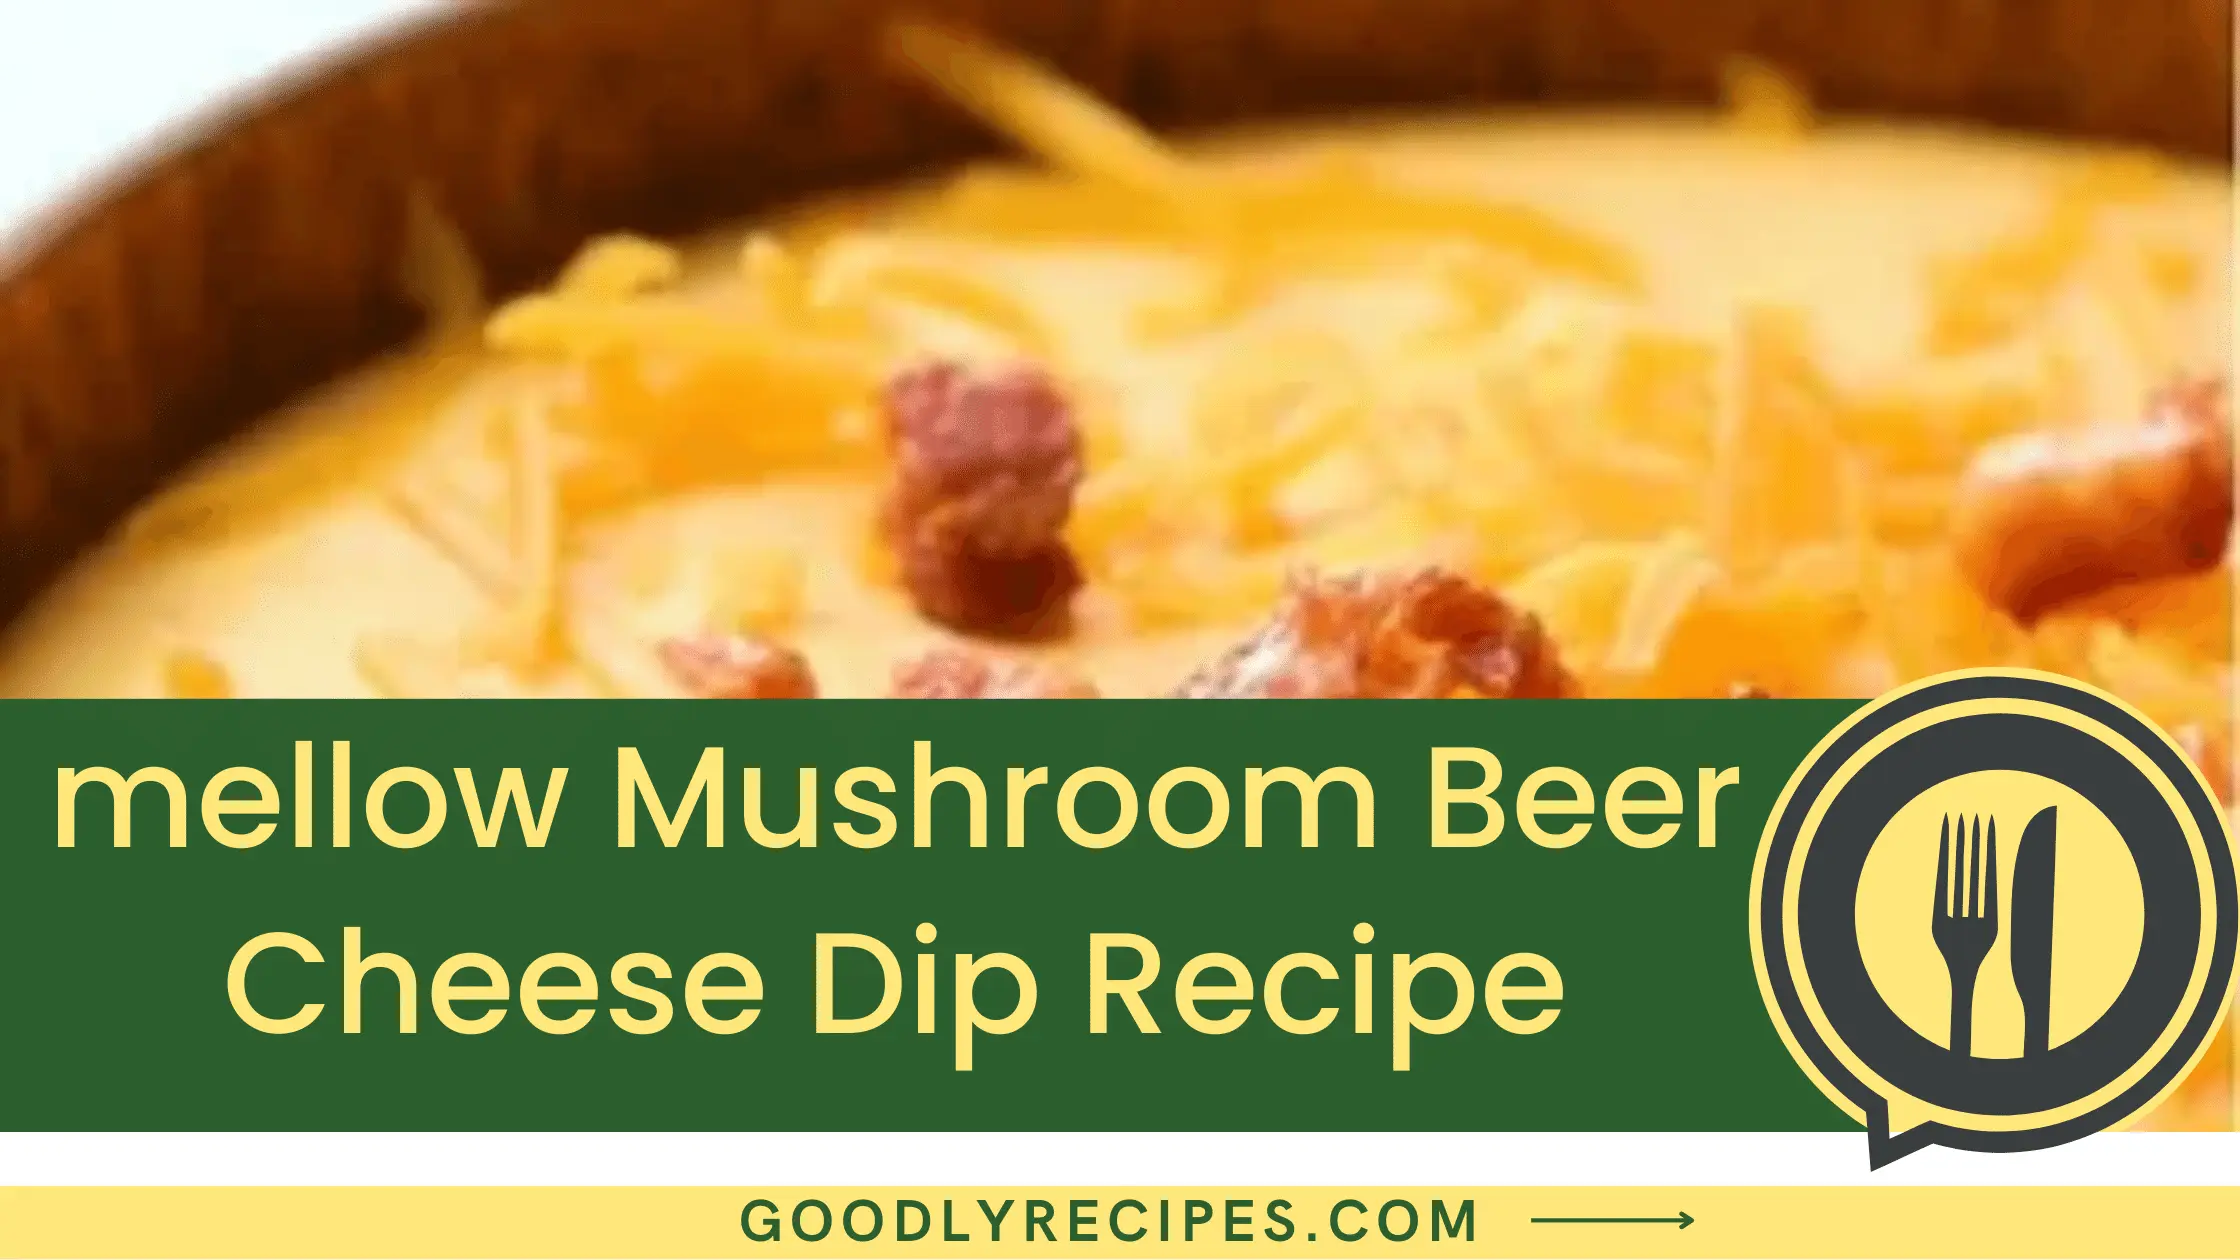 Mellow Mushroom Beer Cheese Dip Recipe - For Food Lovers